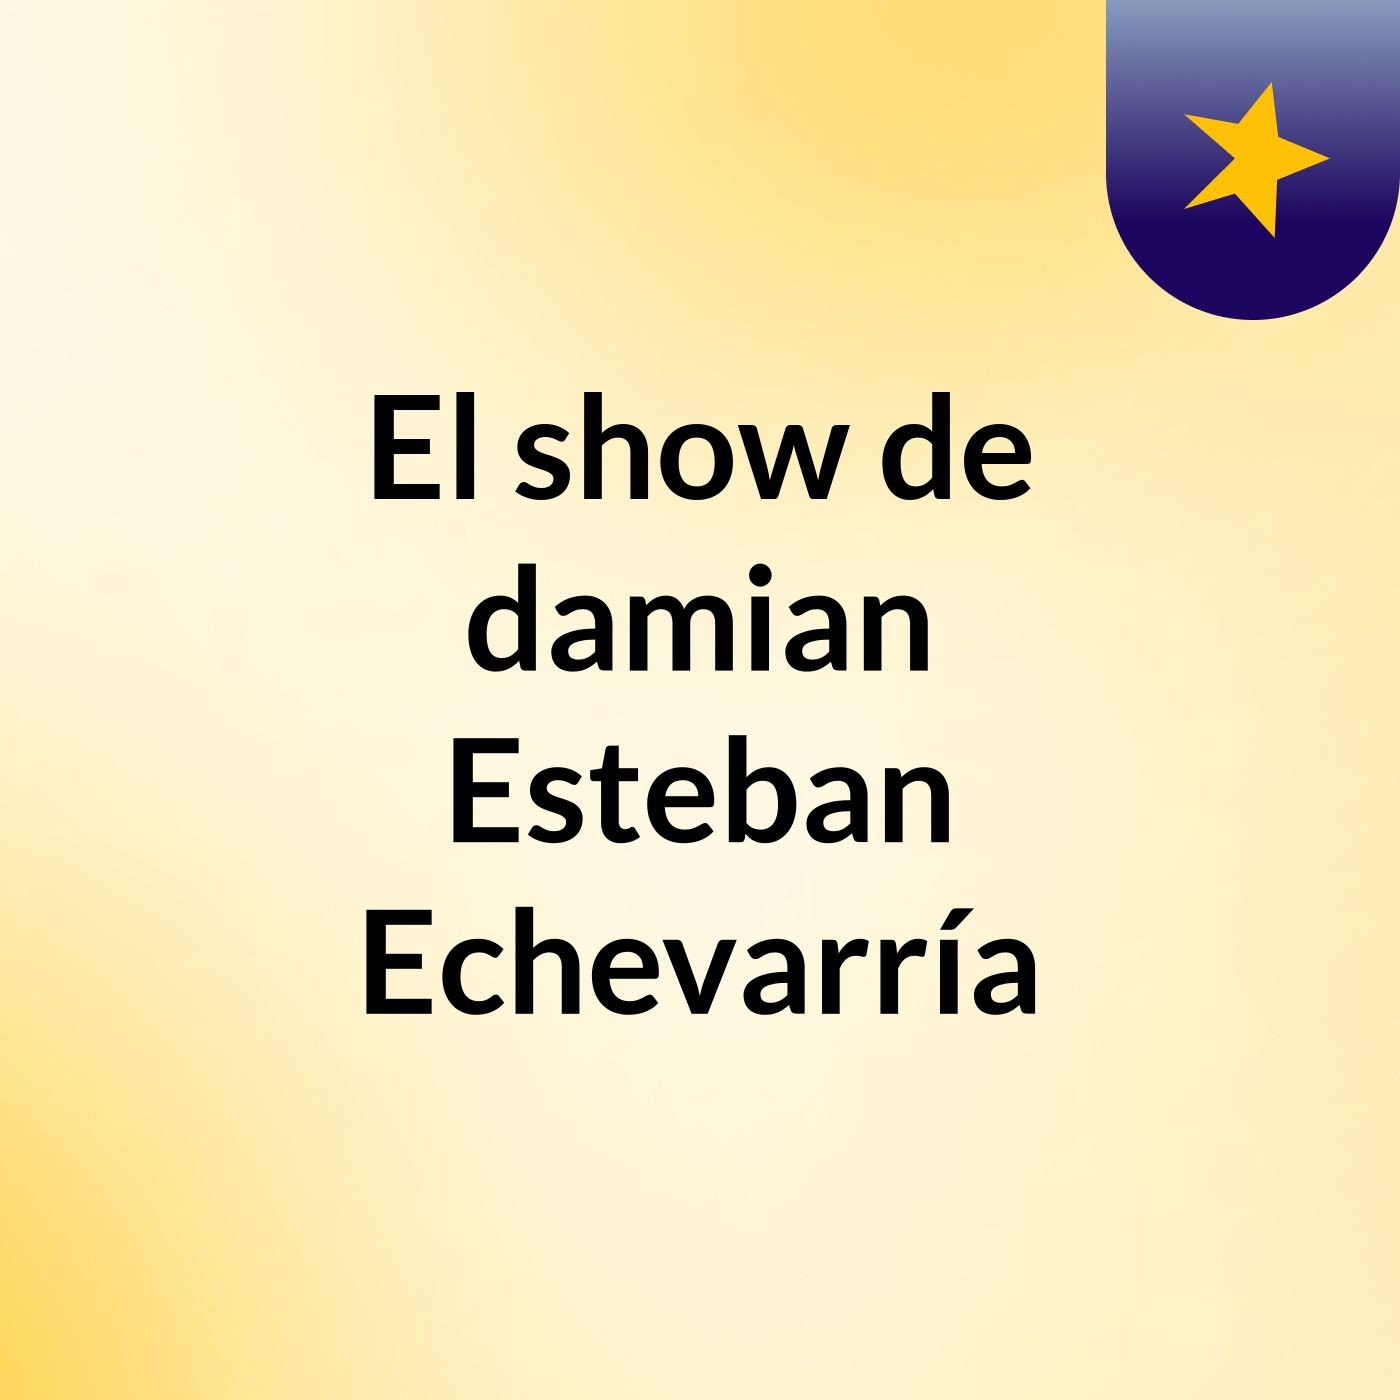 Episodio 3 - El show de damian Esteban Echevarría